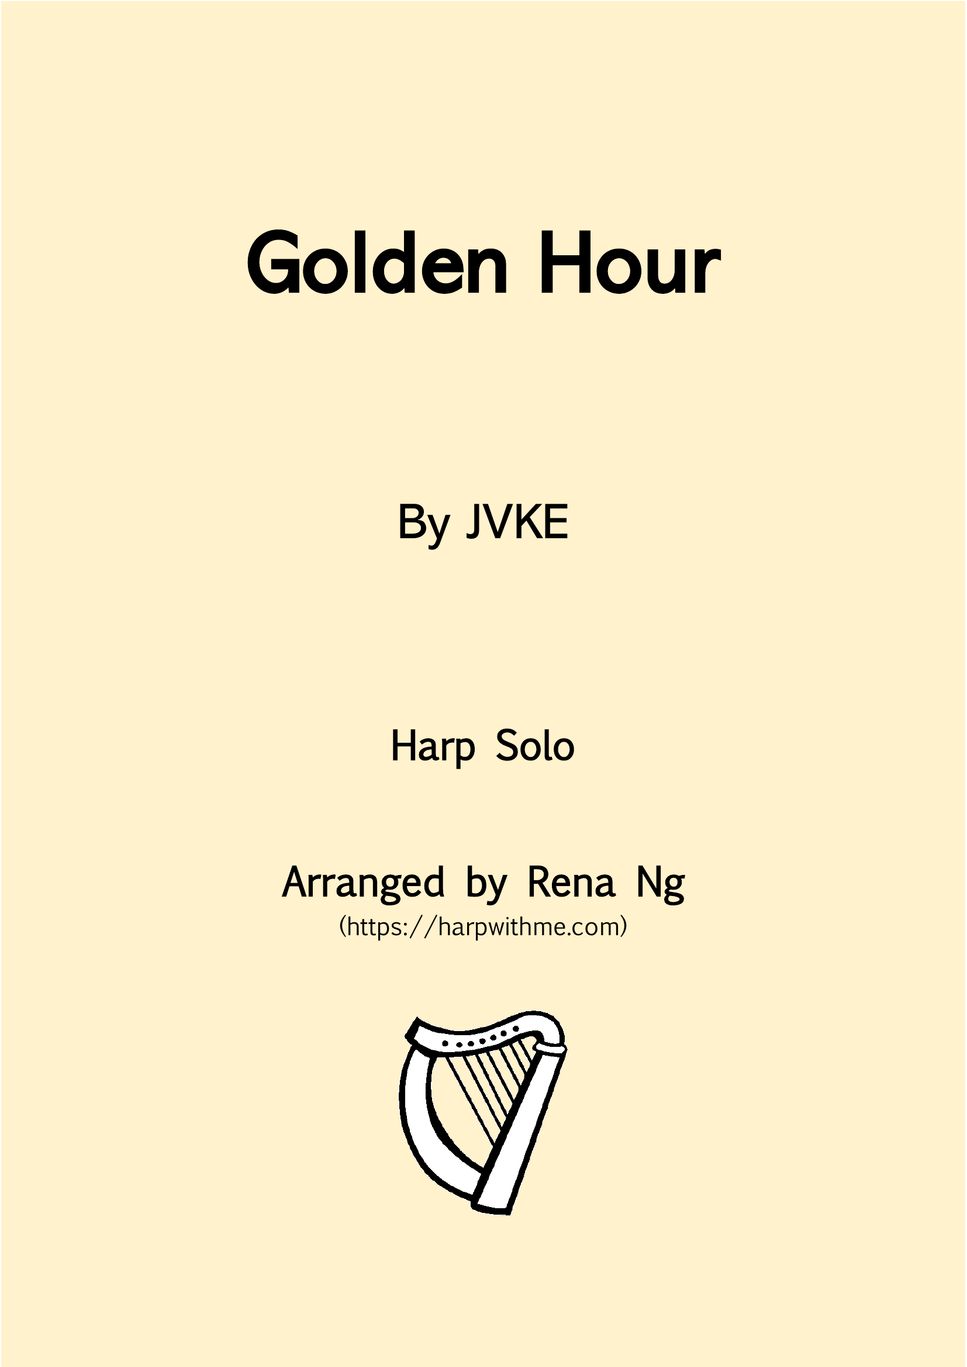 JVKE - Golden Hour (Harp Solo) - Intermediate by Harp With Me